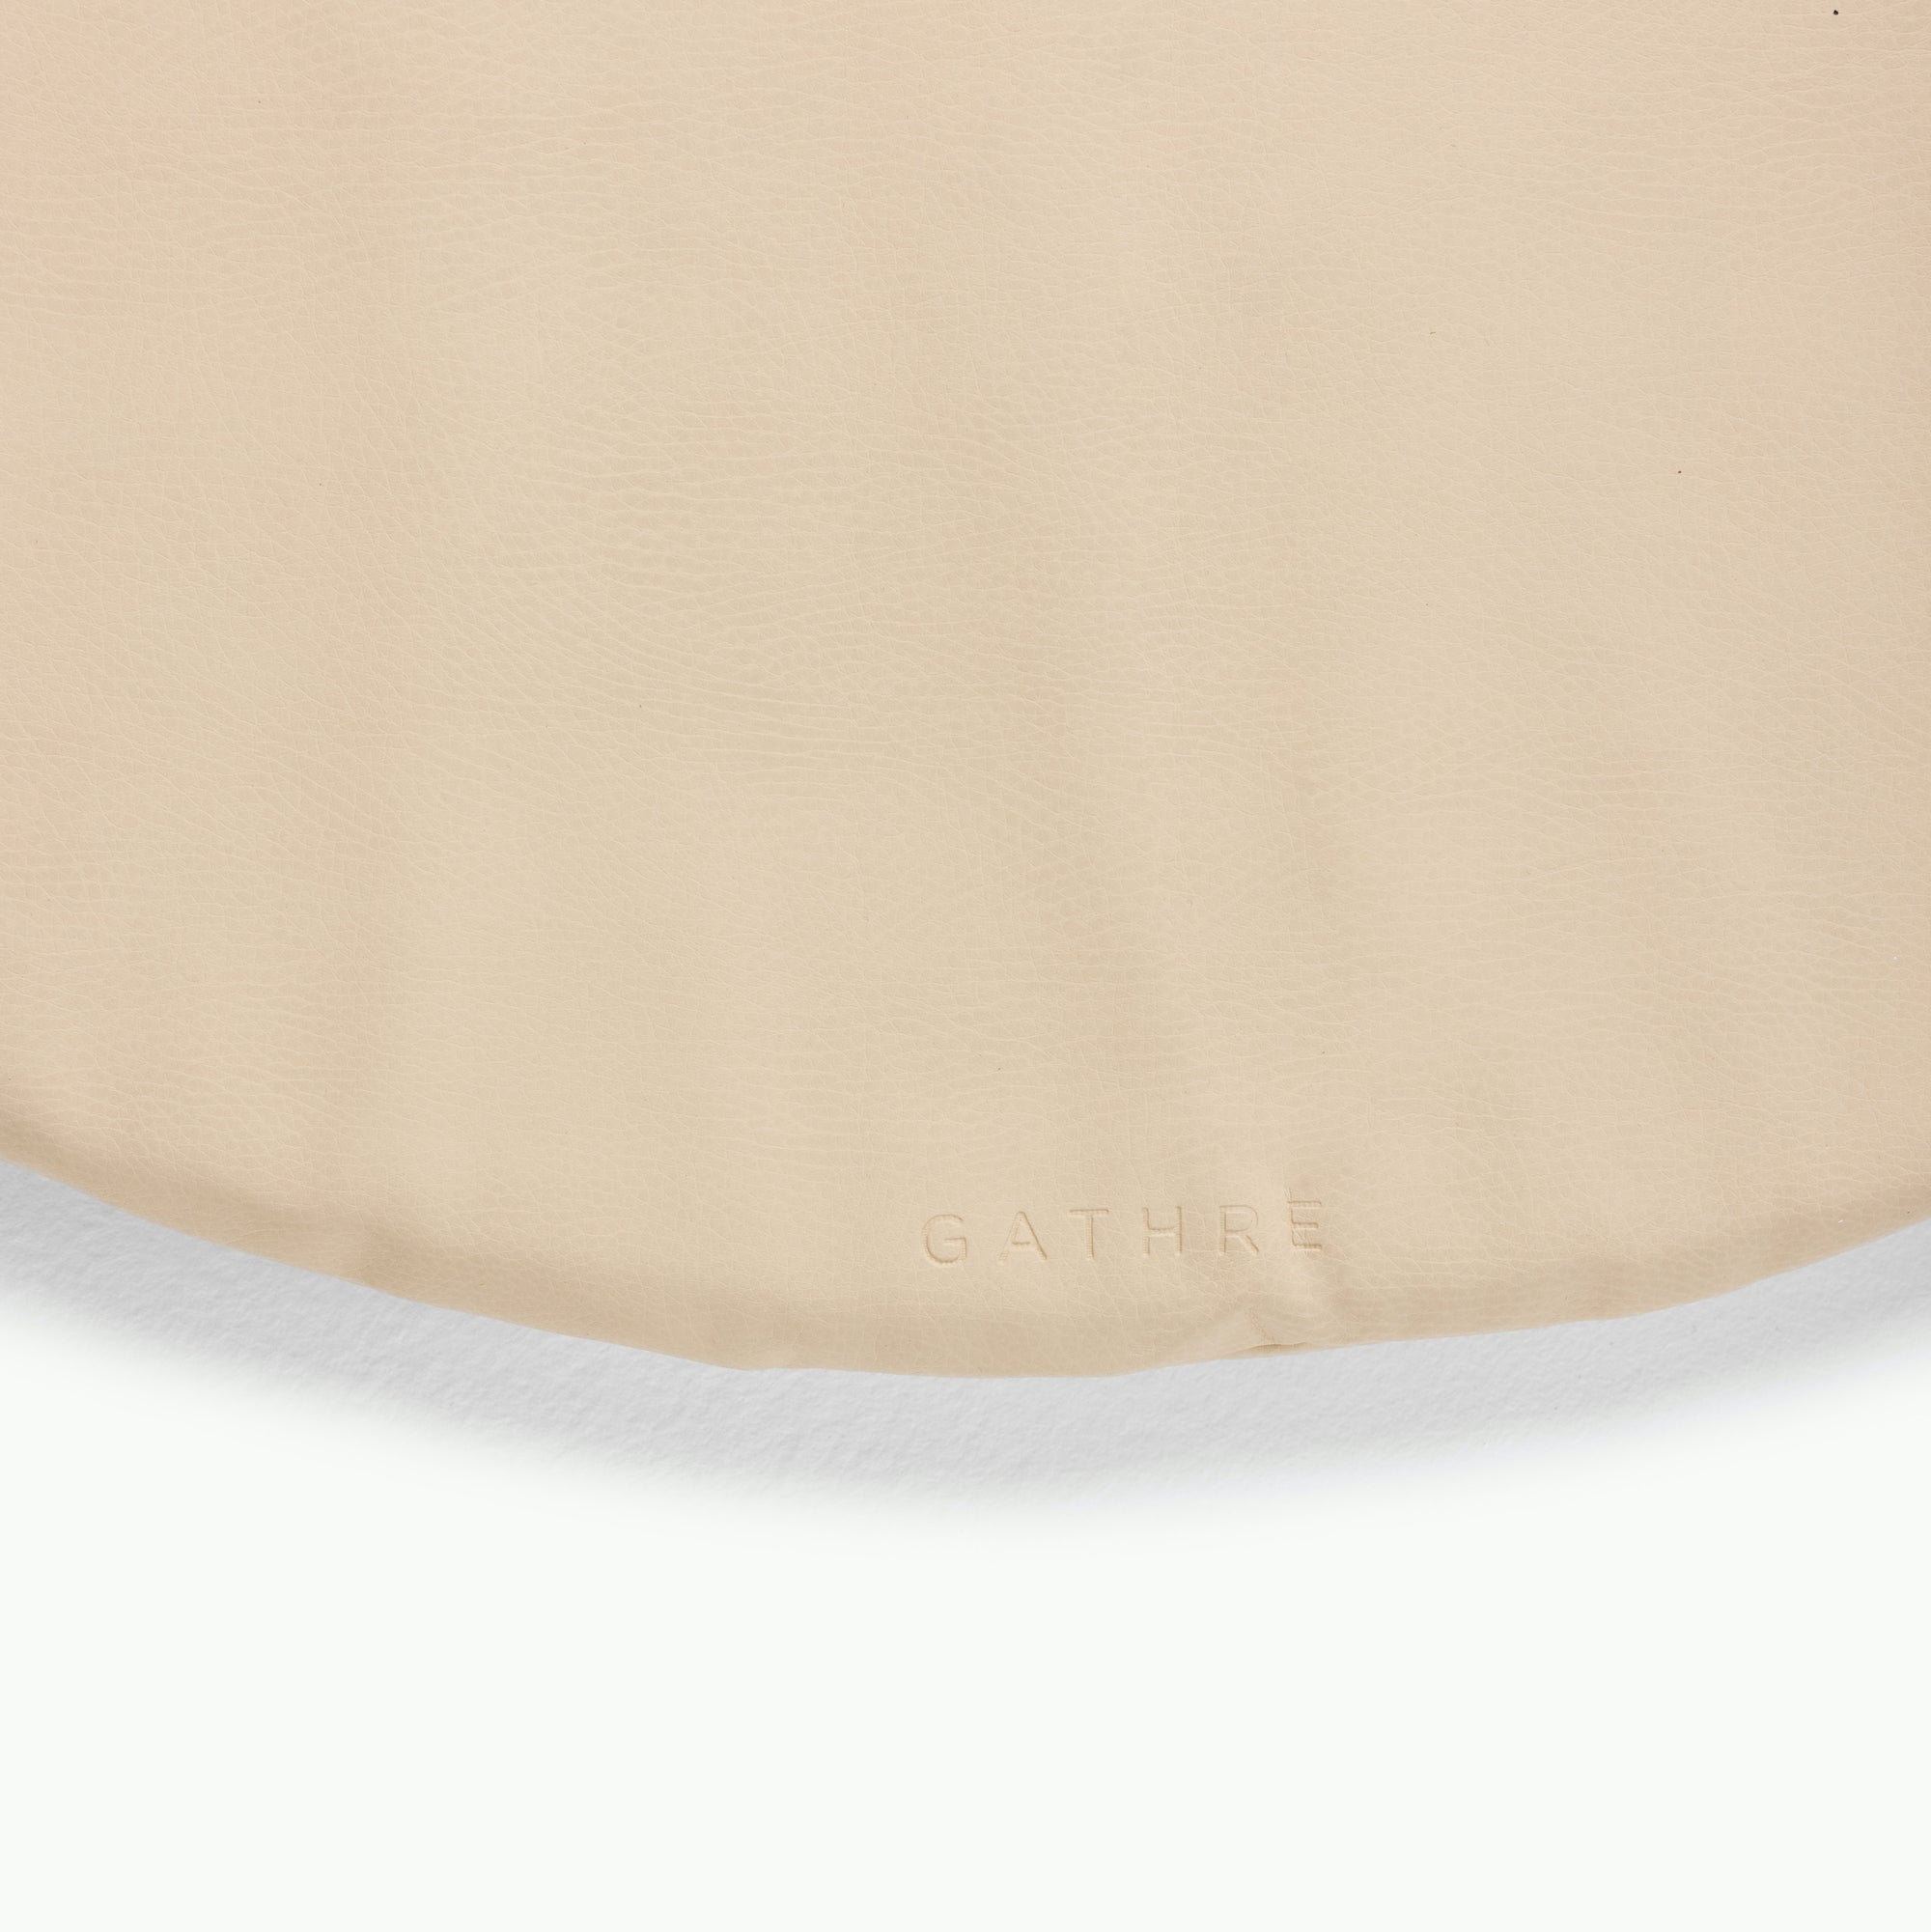 Créme / Circle@deboss detail of padded mat